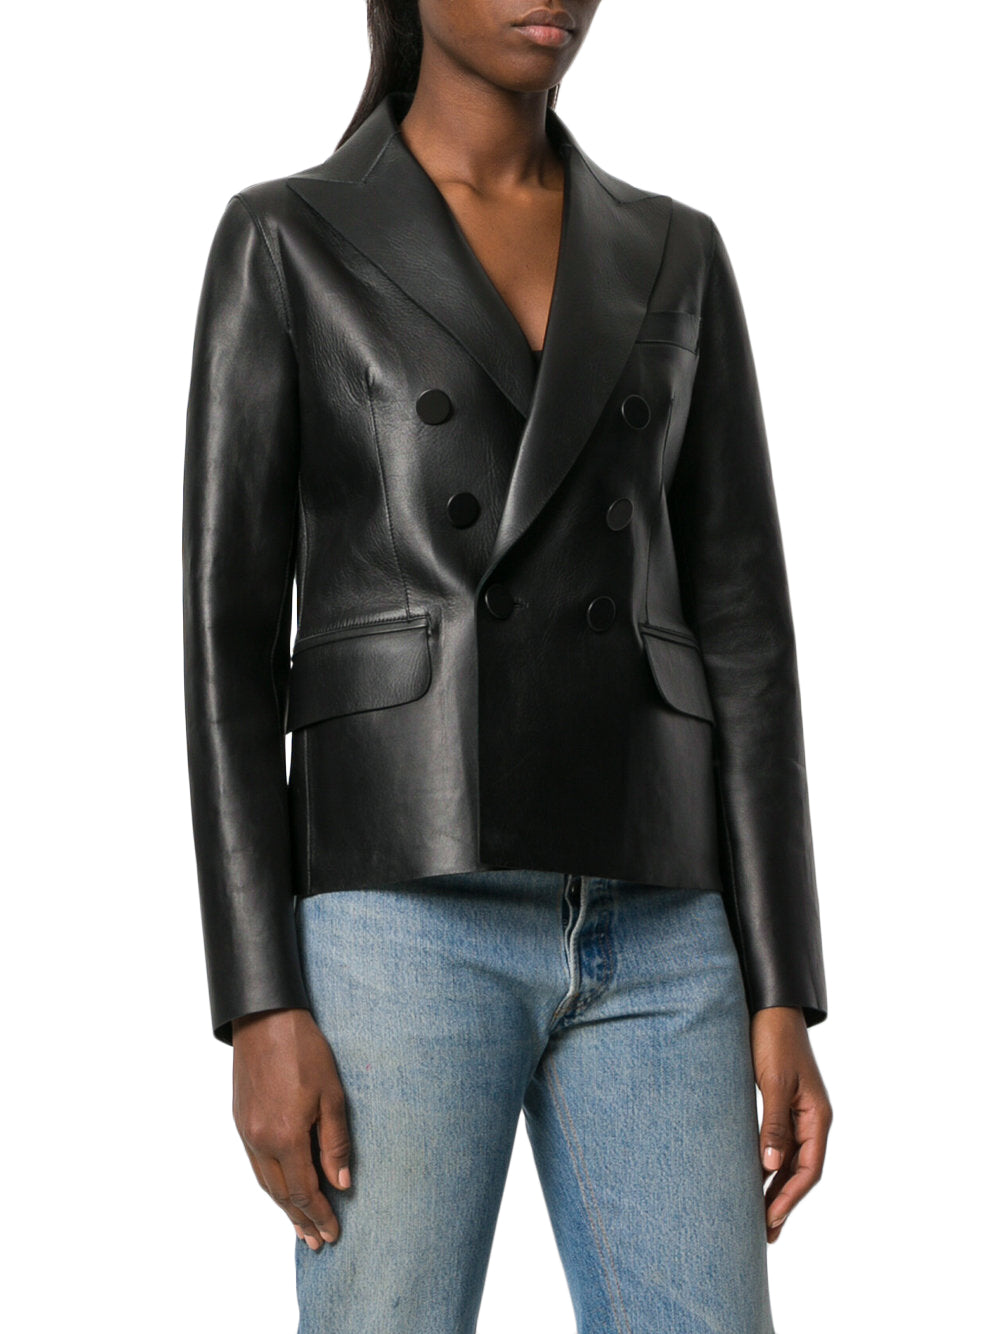 Leather Jackets Hub Womens Genuine Cowhide Leather Jacket (Black, Officer Jacket) - 1821061